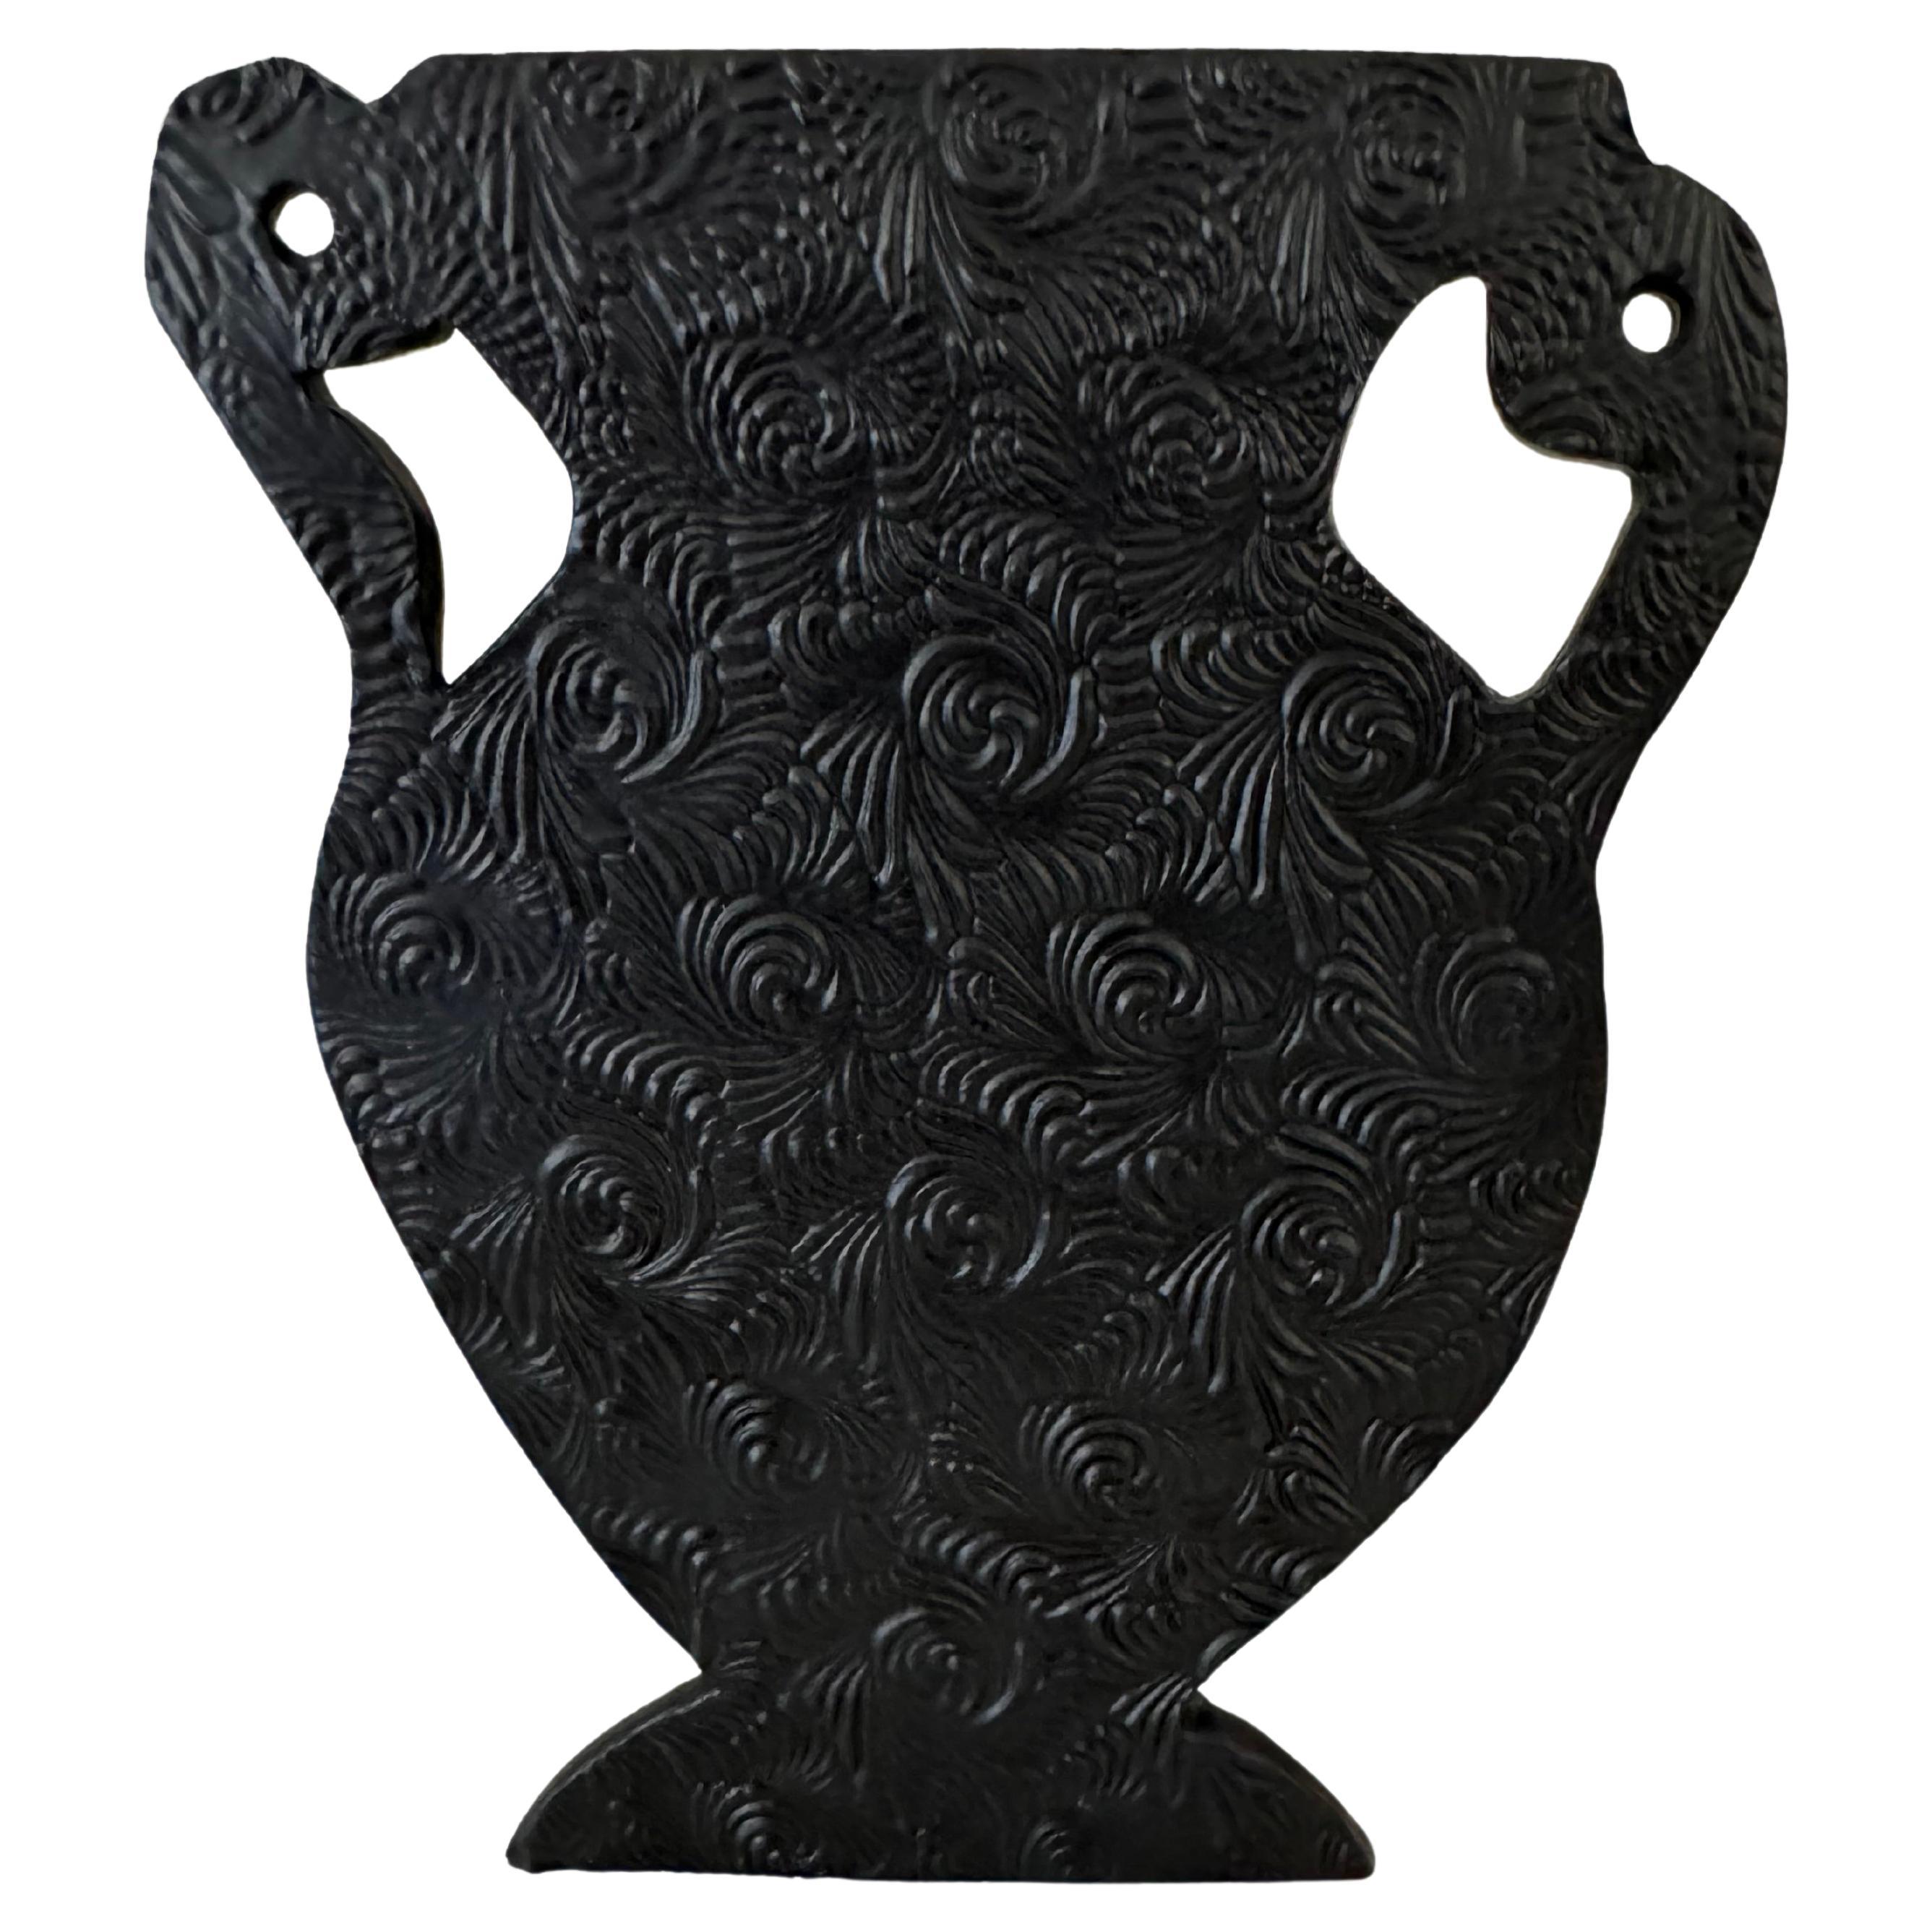 Quirky matte black brocade silhouette vase For Sale